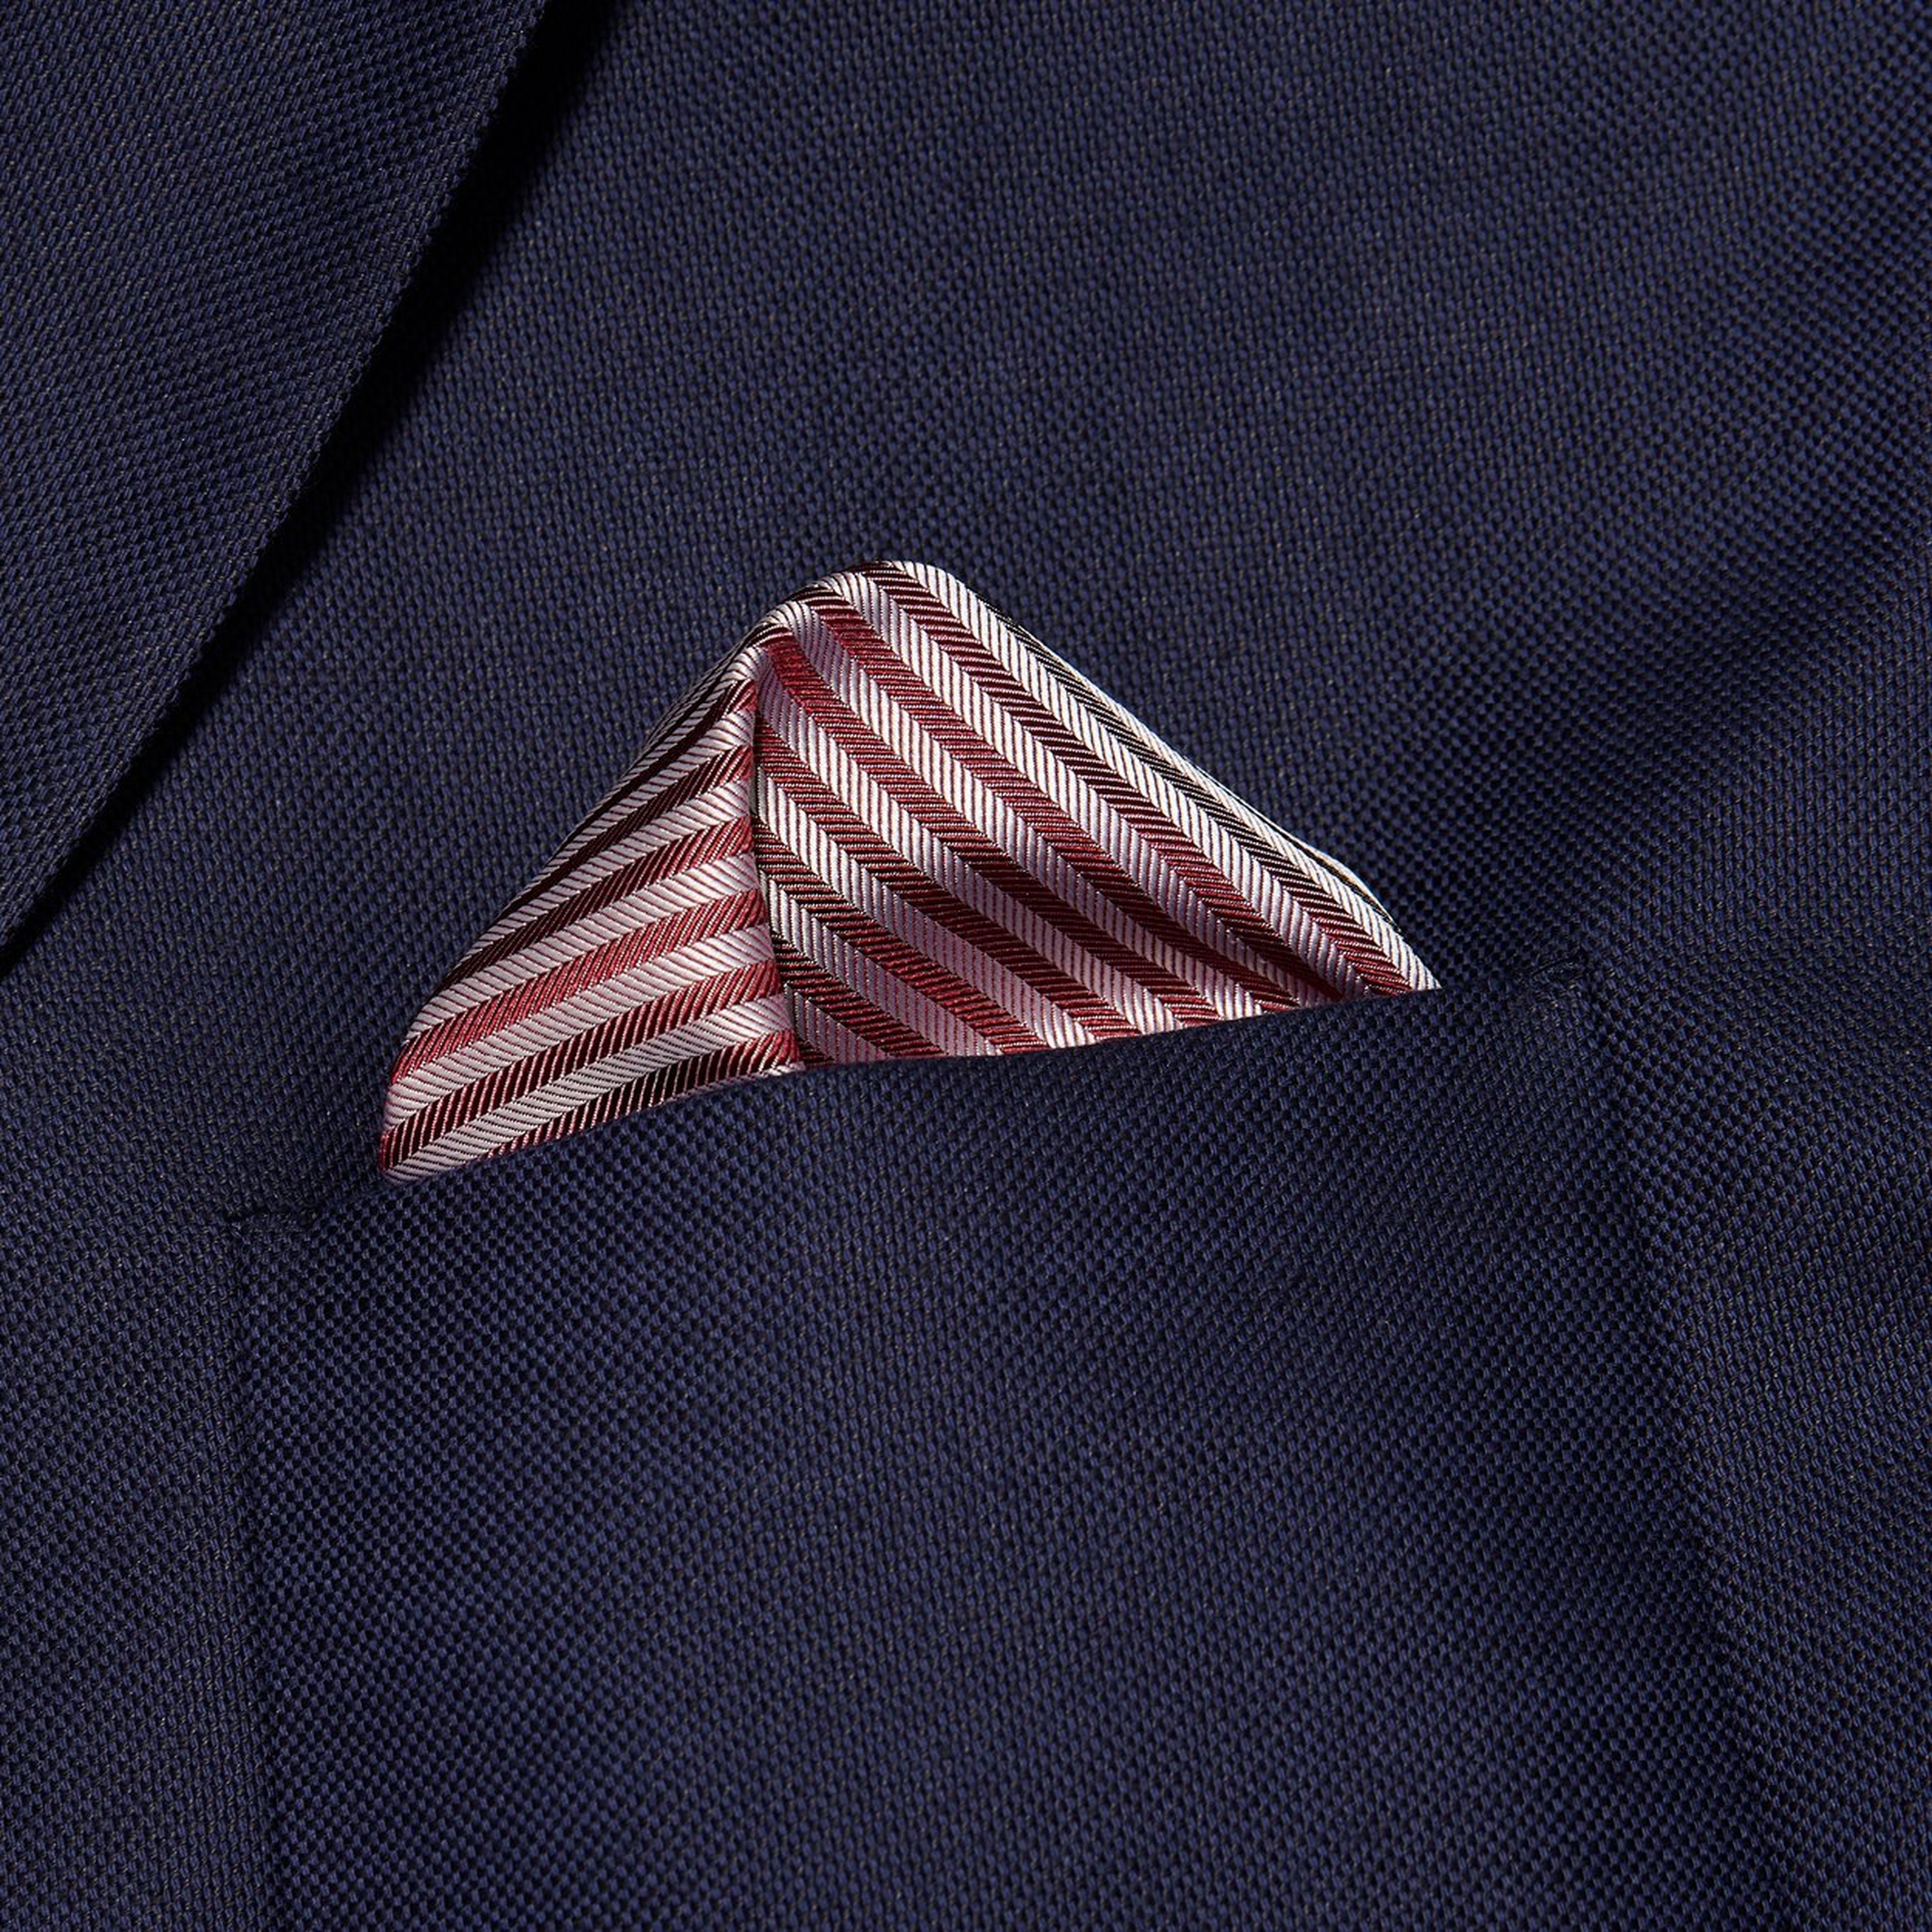 Thomas Pink's Striped Woven Silk Pocket Square